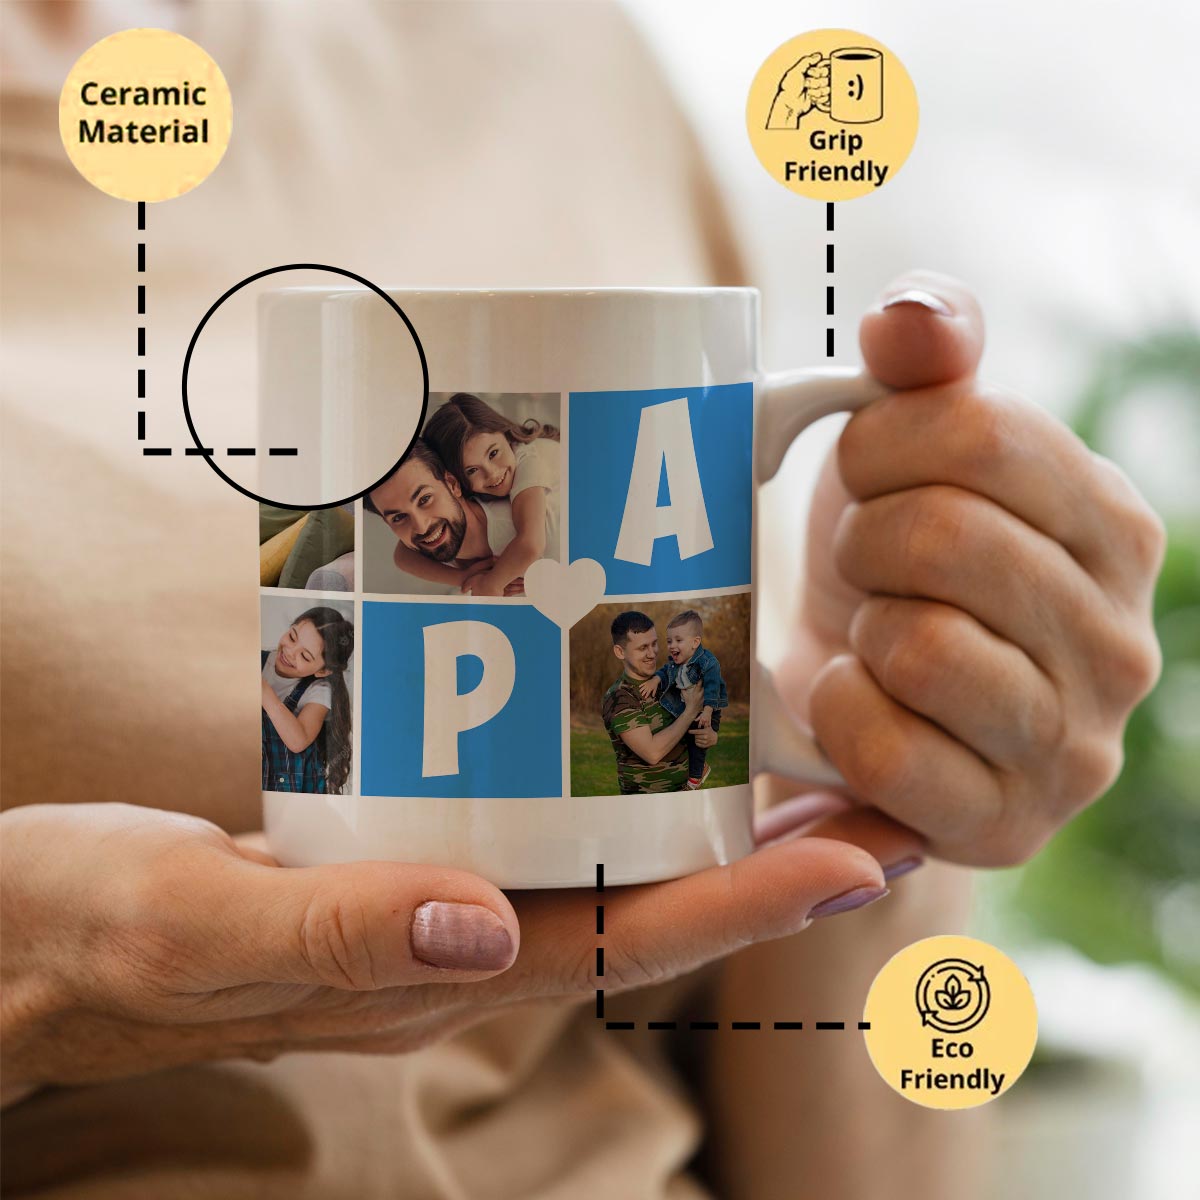 Personalised Papa Coffee Mug